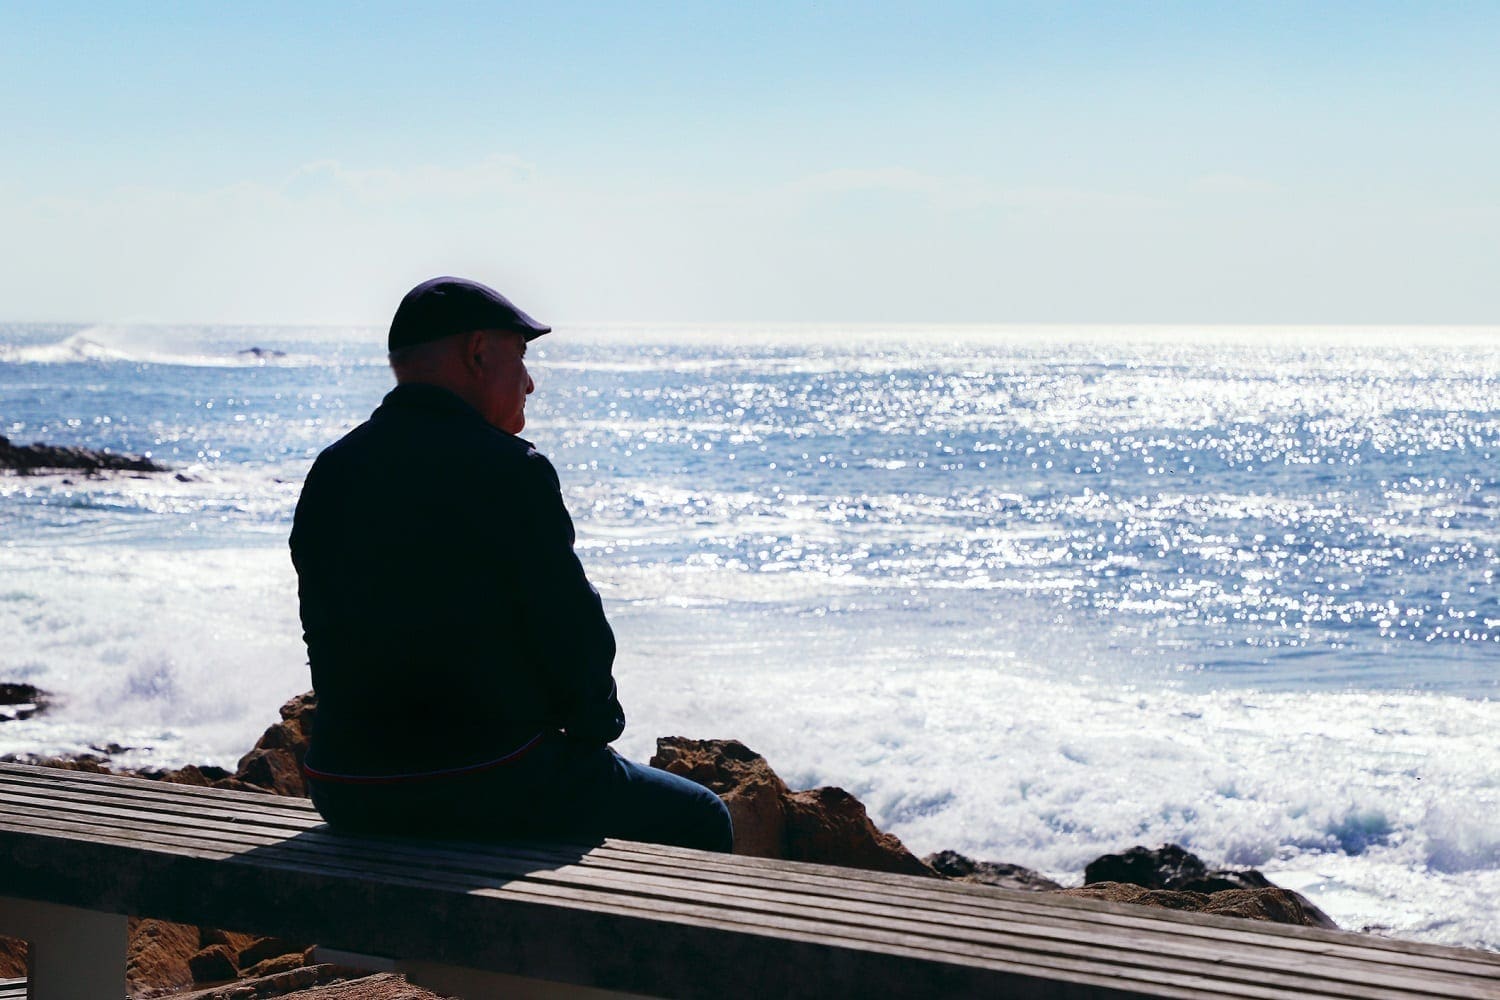 Old man sitting on a bench watching the ocean: ID 132930490 © Olena Klymenok | Dreamstime.com